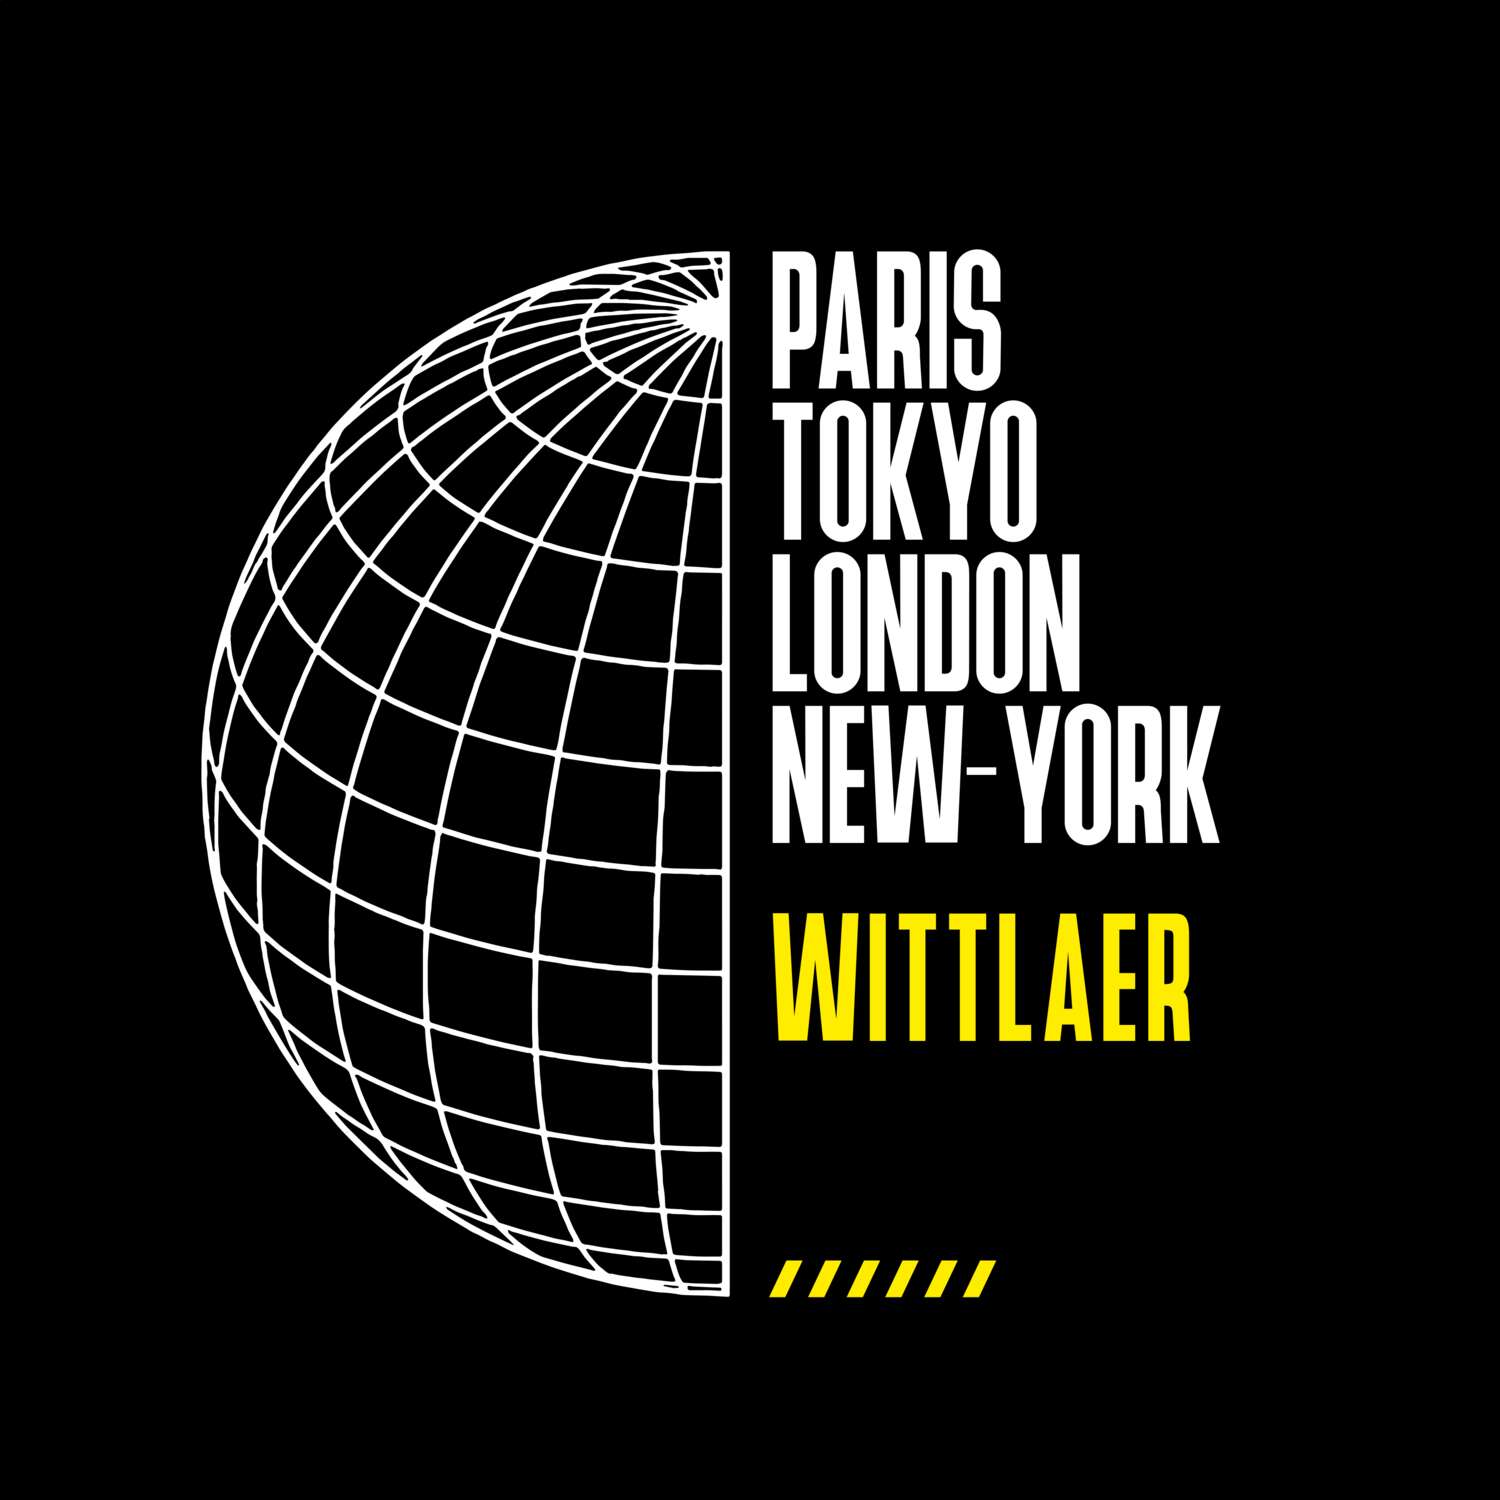 Wittlaer T-Shirt »Paris Tokyo London«